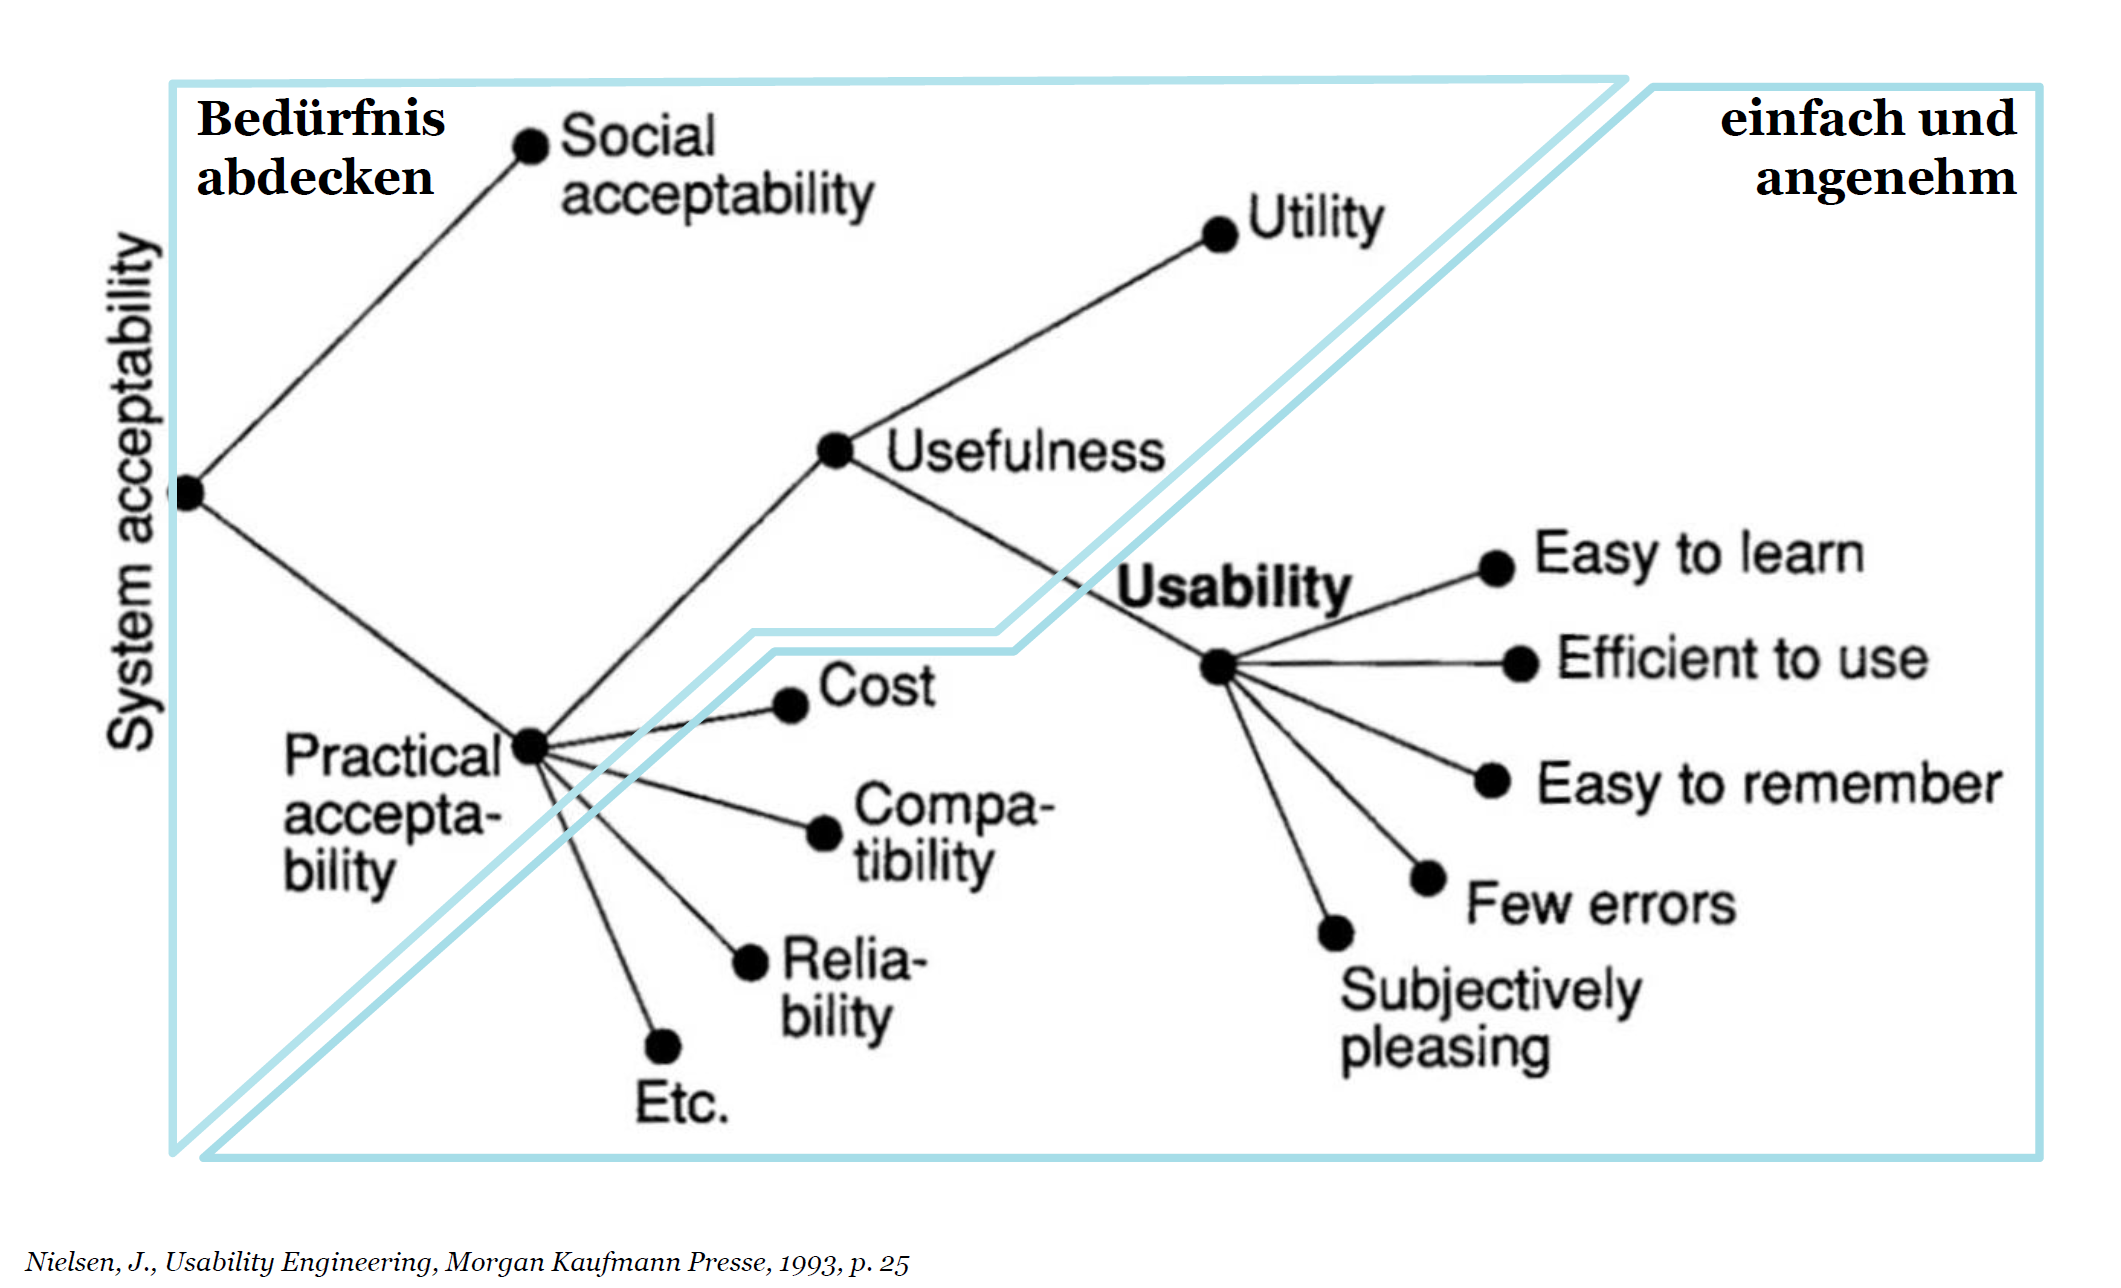 Acceptability - Practicability - Usability - Simplicity 